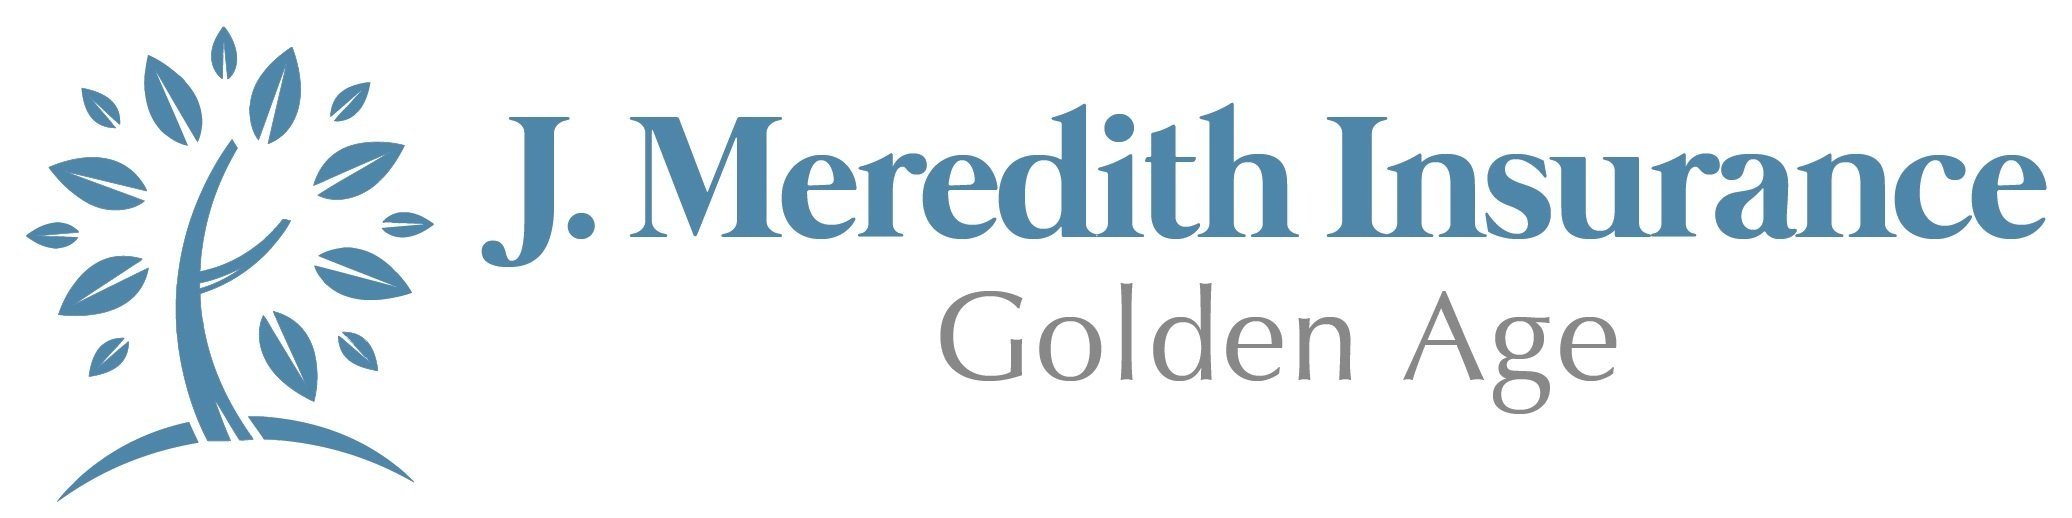 J. Meredith Insurance